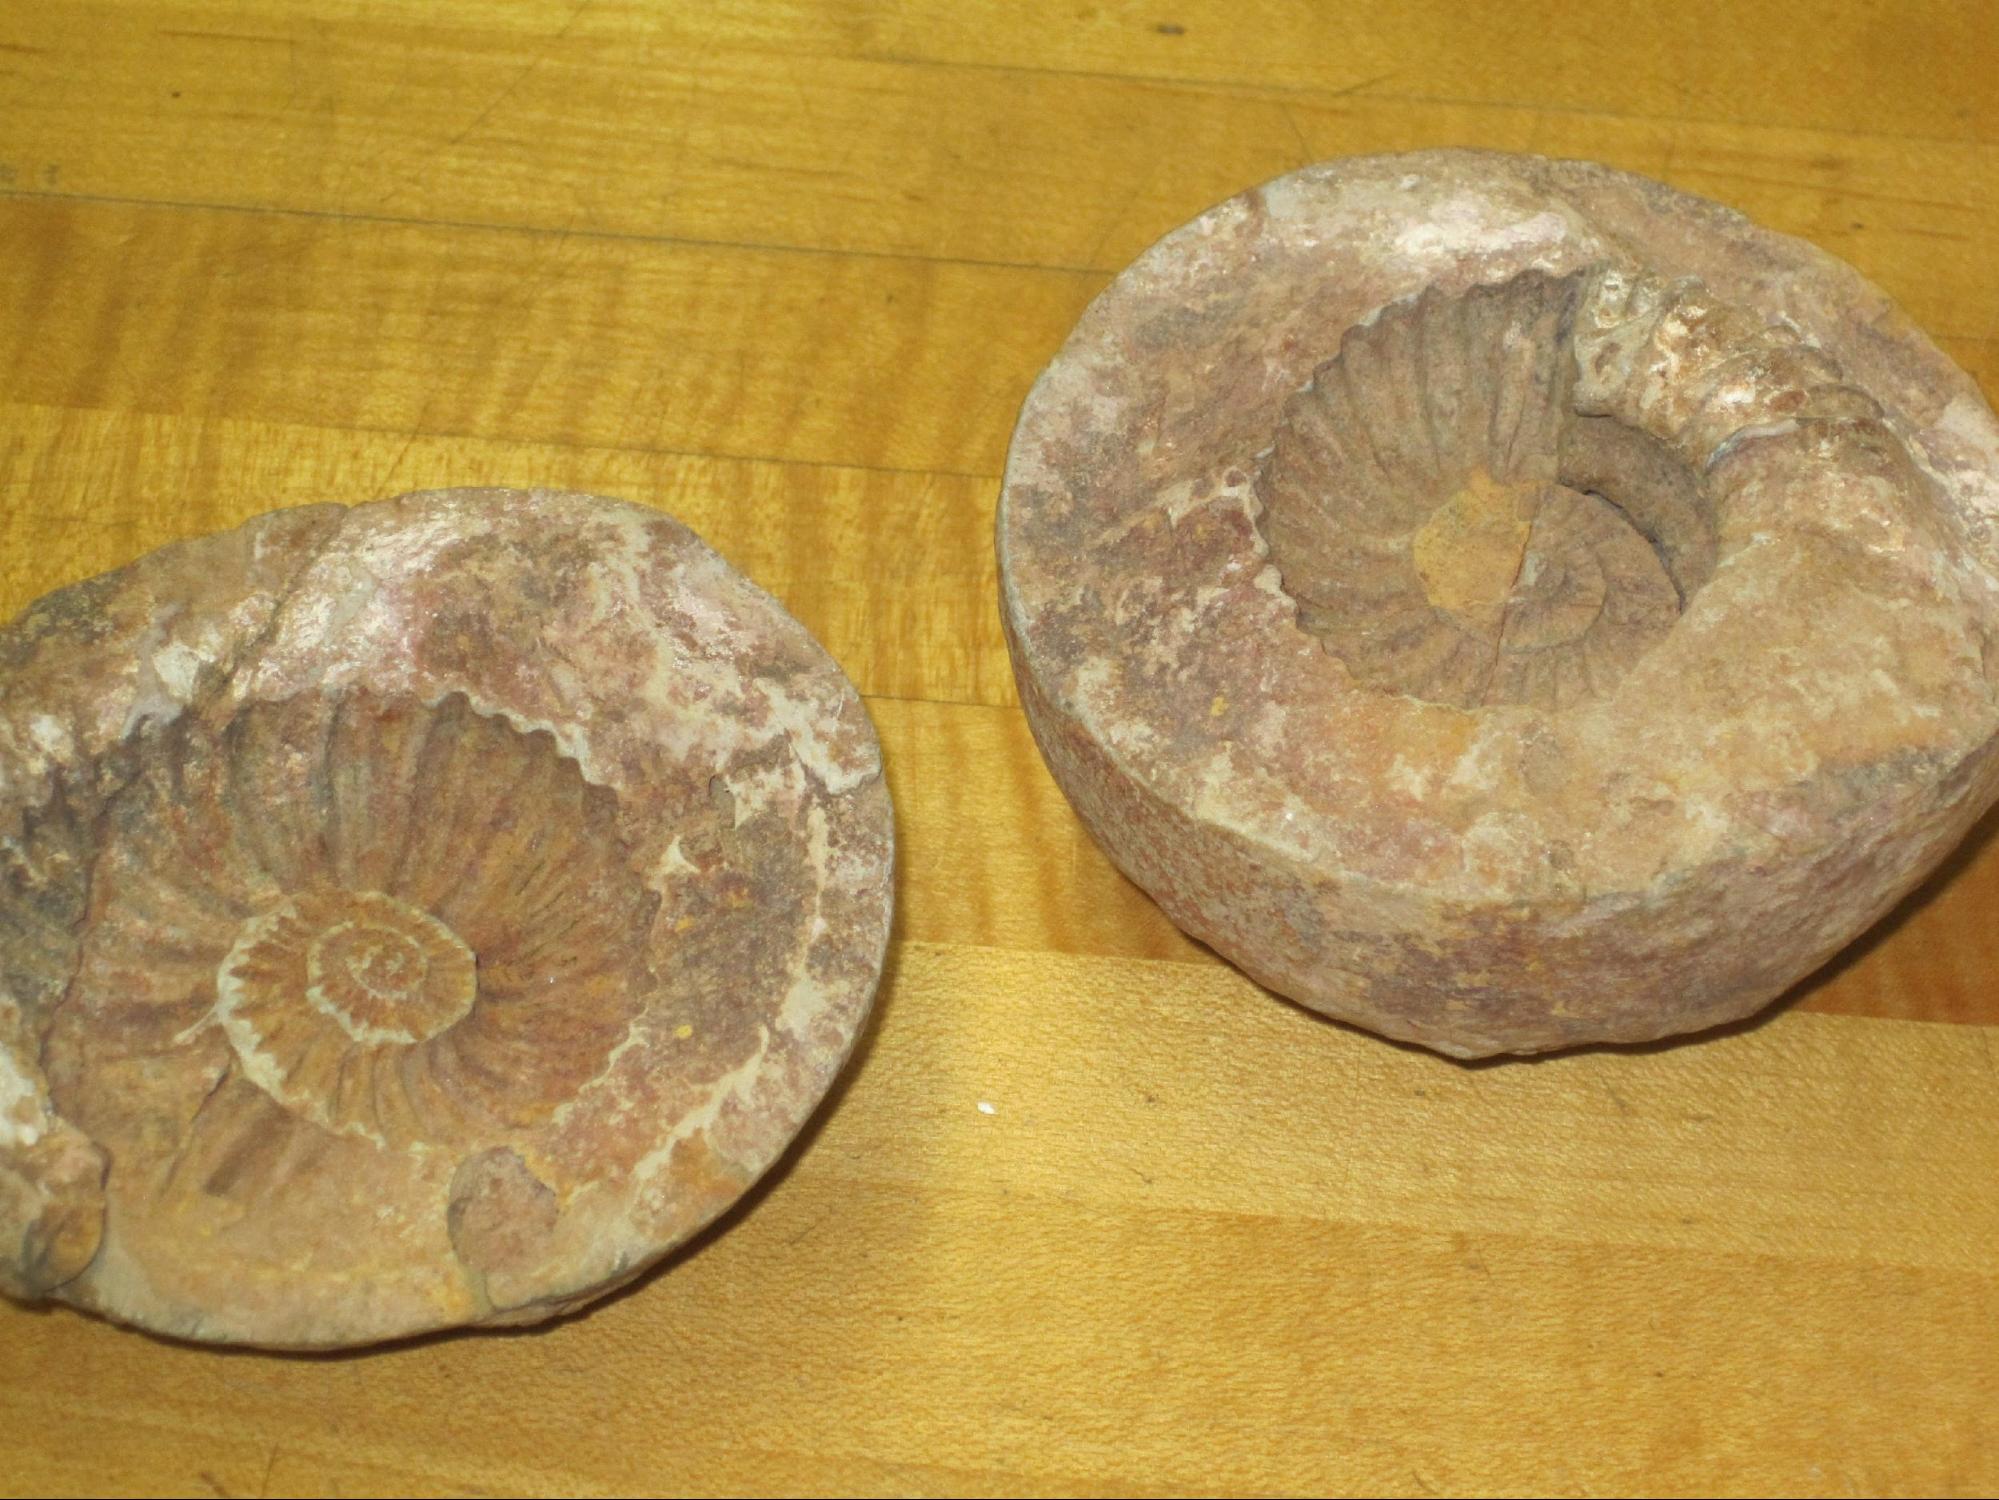 Fossils 2